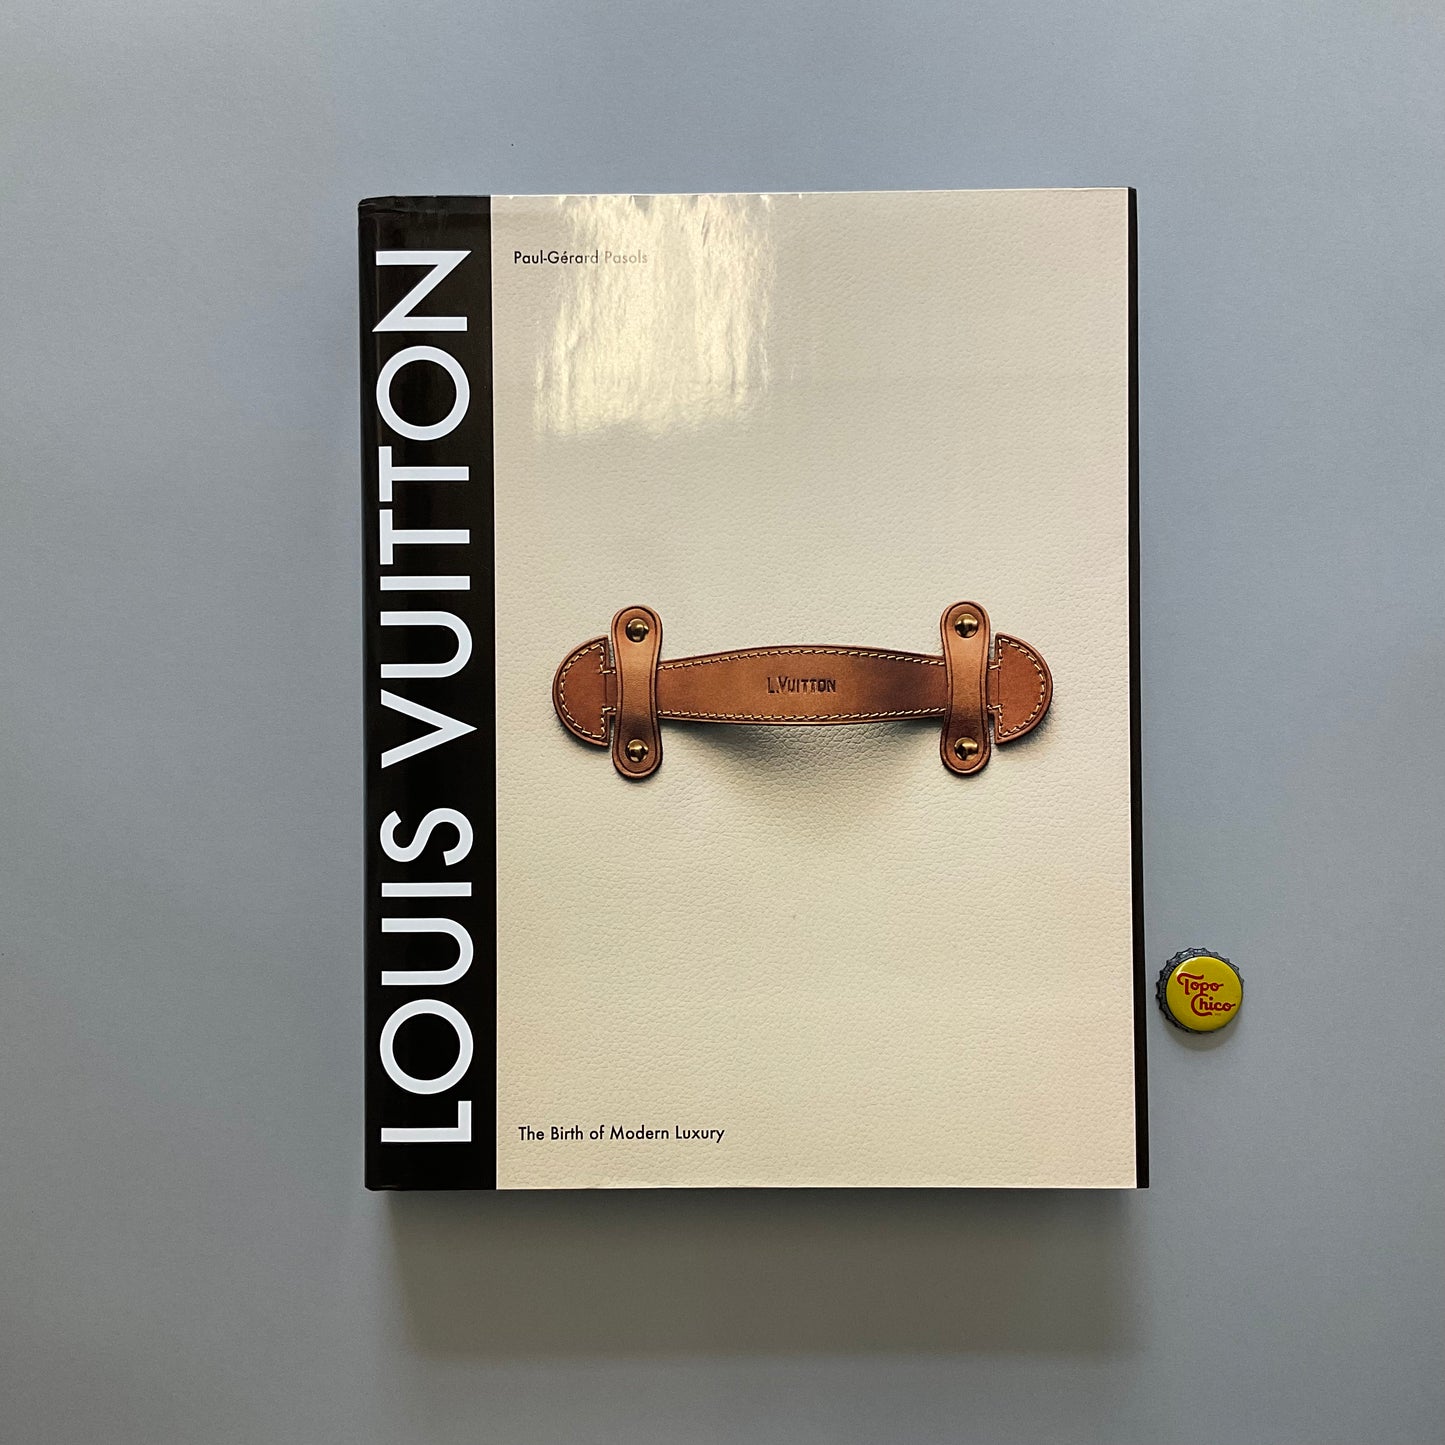 Louis Vuitton Book – The Props Dept.